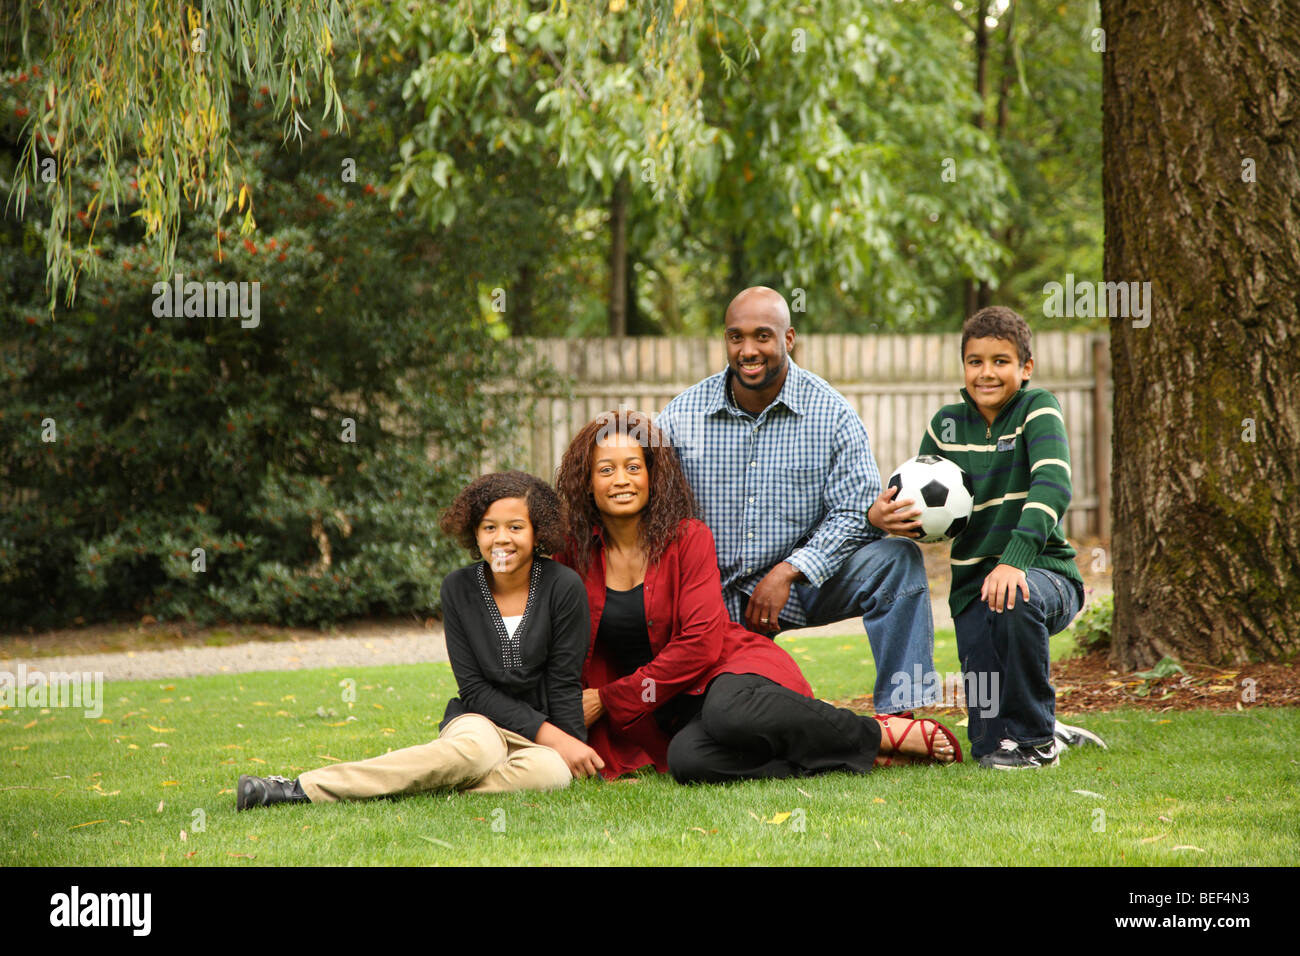 Family portrait in yard Stock Photo